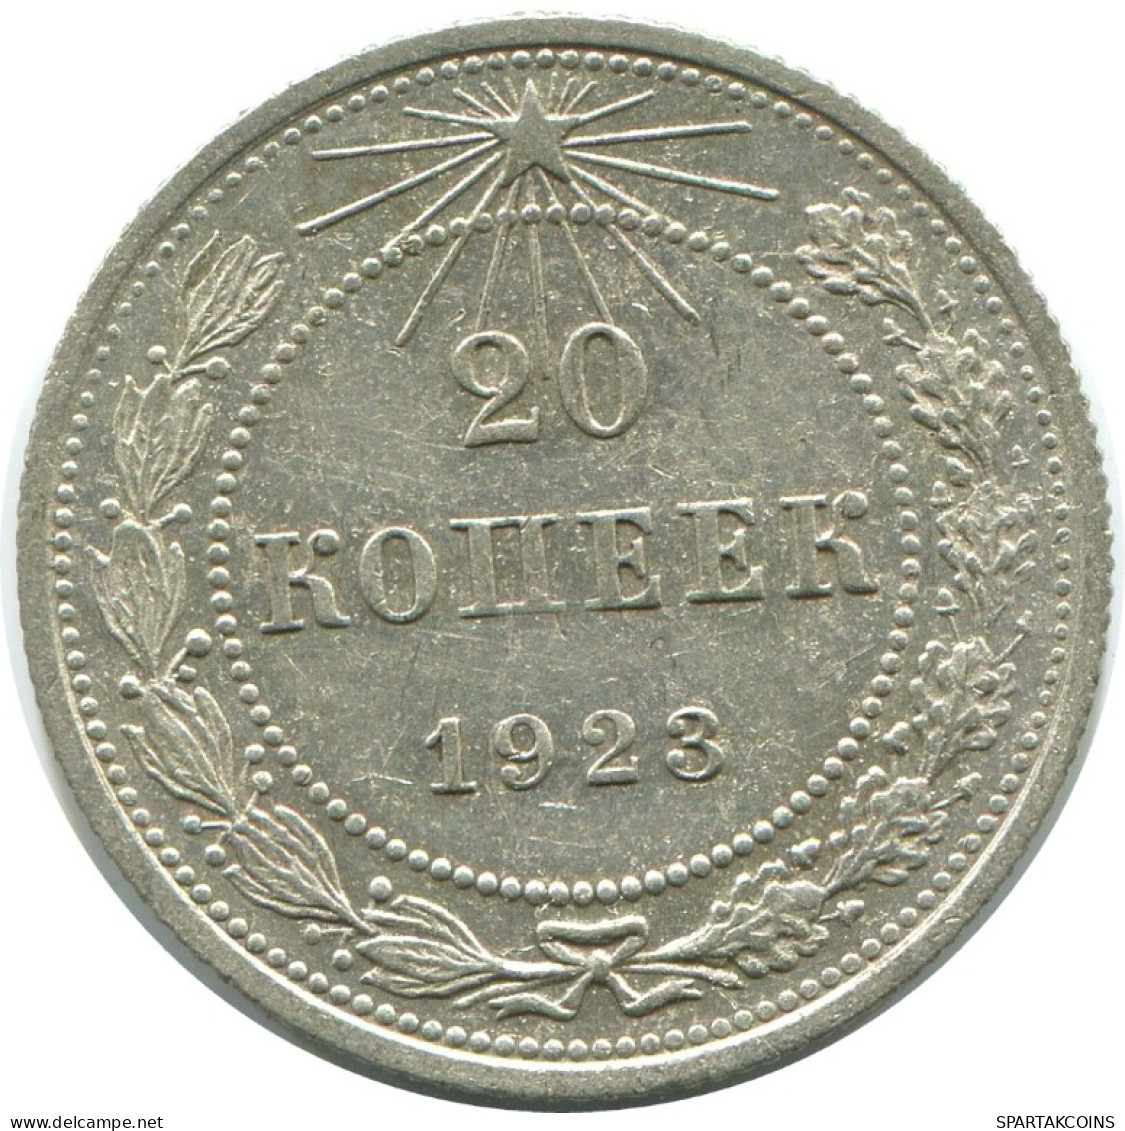 20 KOPEKS 1923 RUSSIA RSFSR SILVER Coin HIGH GRADE #AF554.4.U.A - Russia